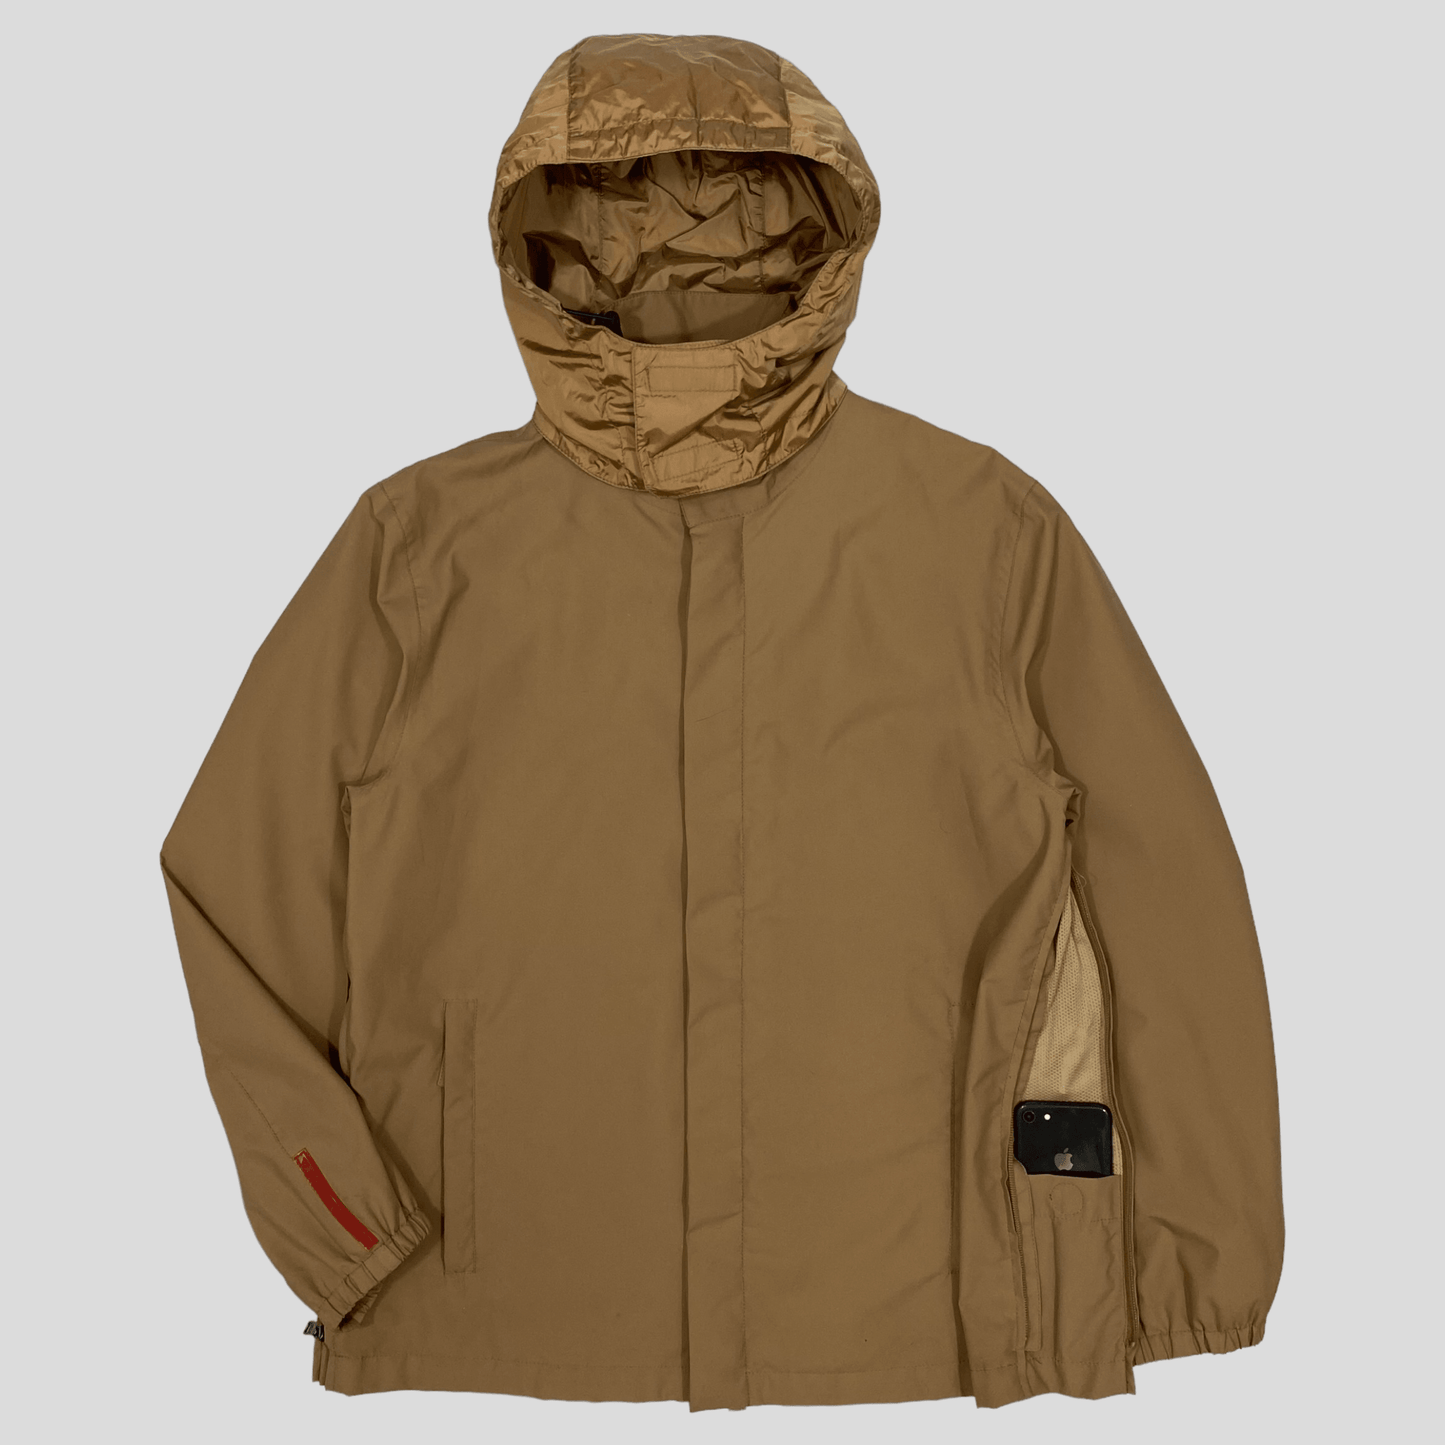 Prada Sport SS01 Goretex Jacket with Nylon Pocket Hood - L - Known Source